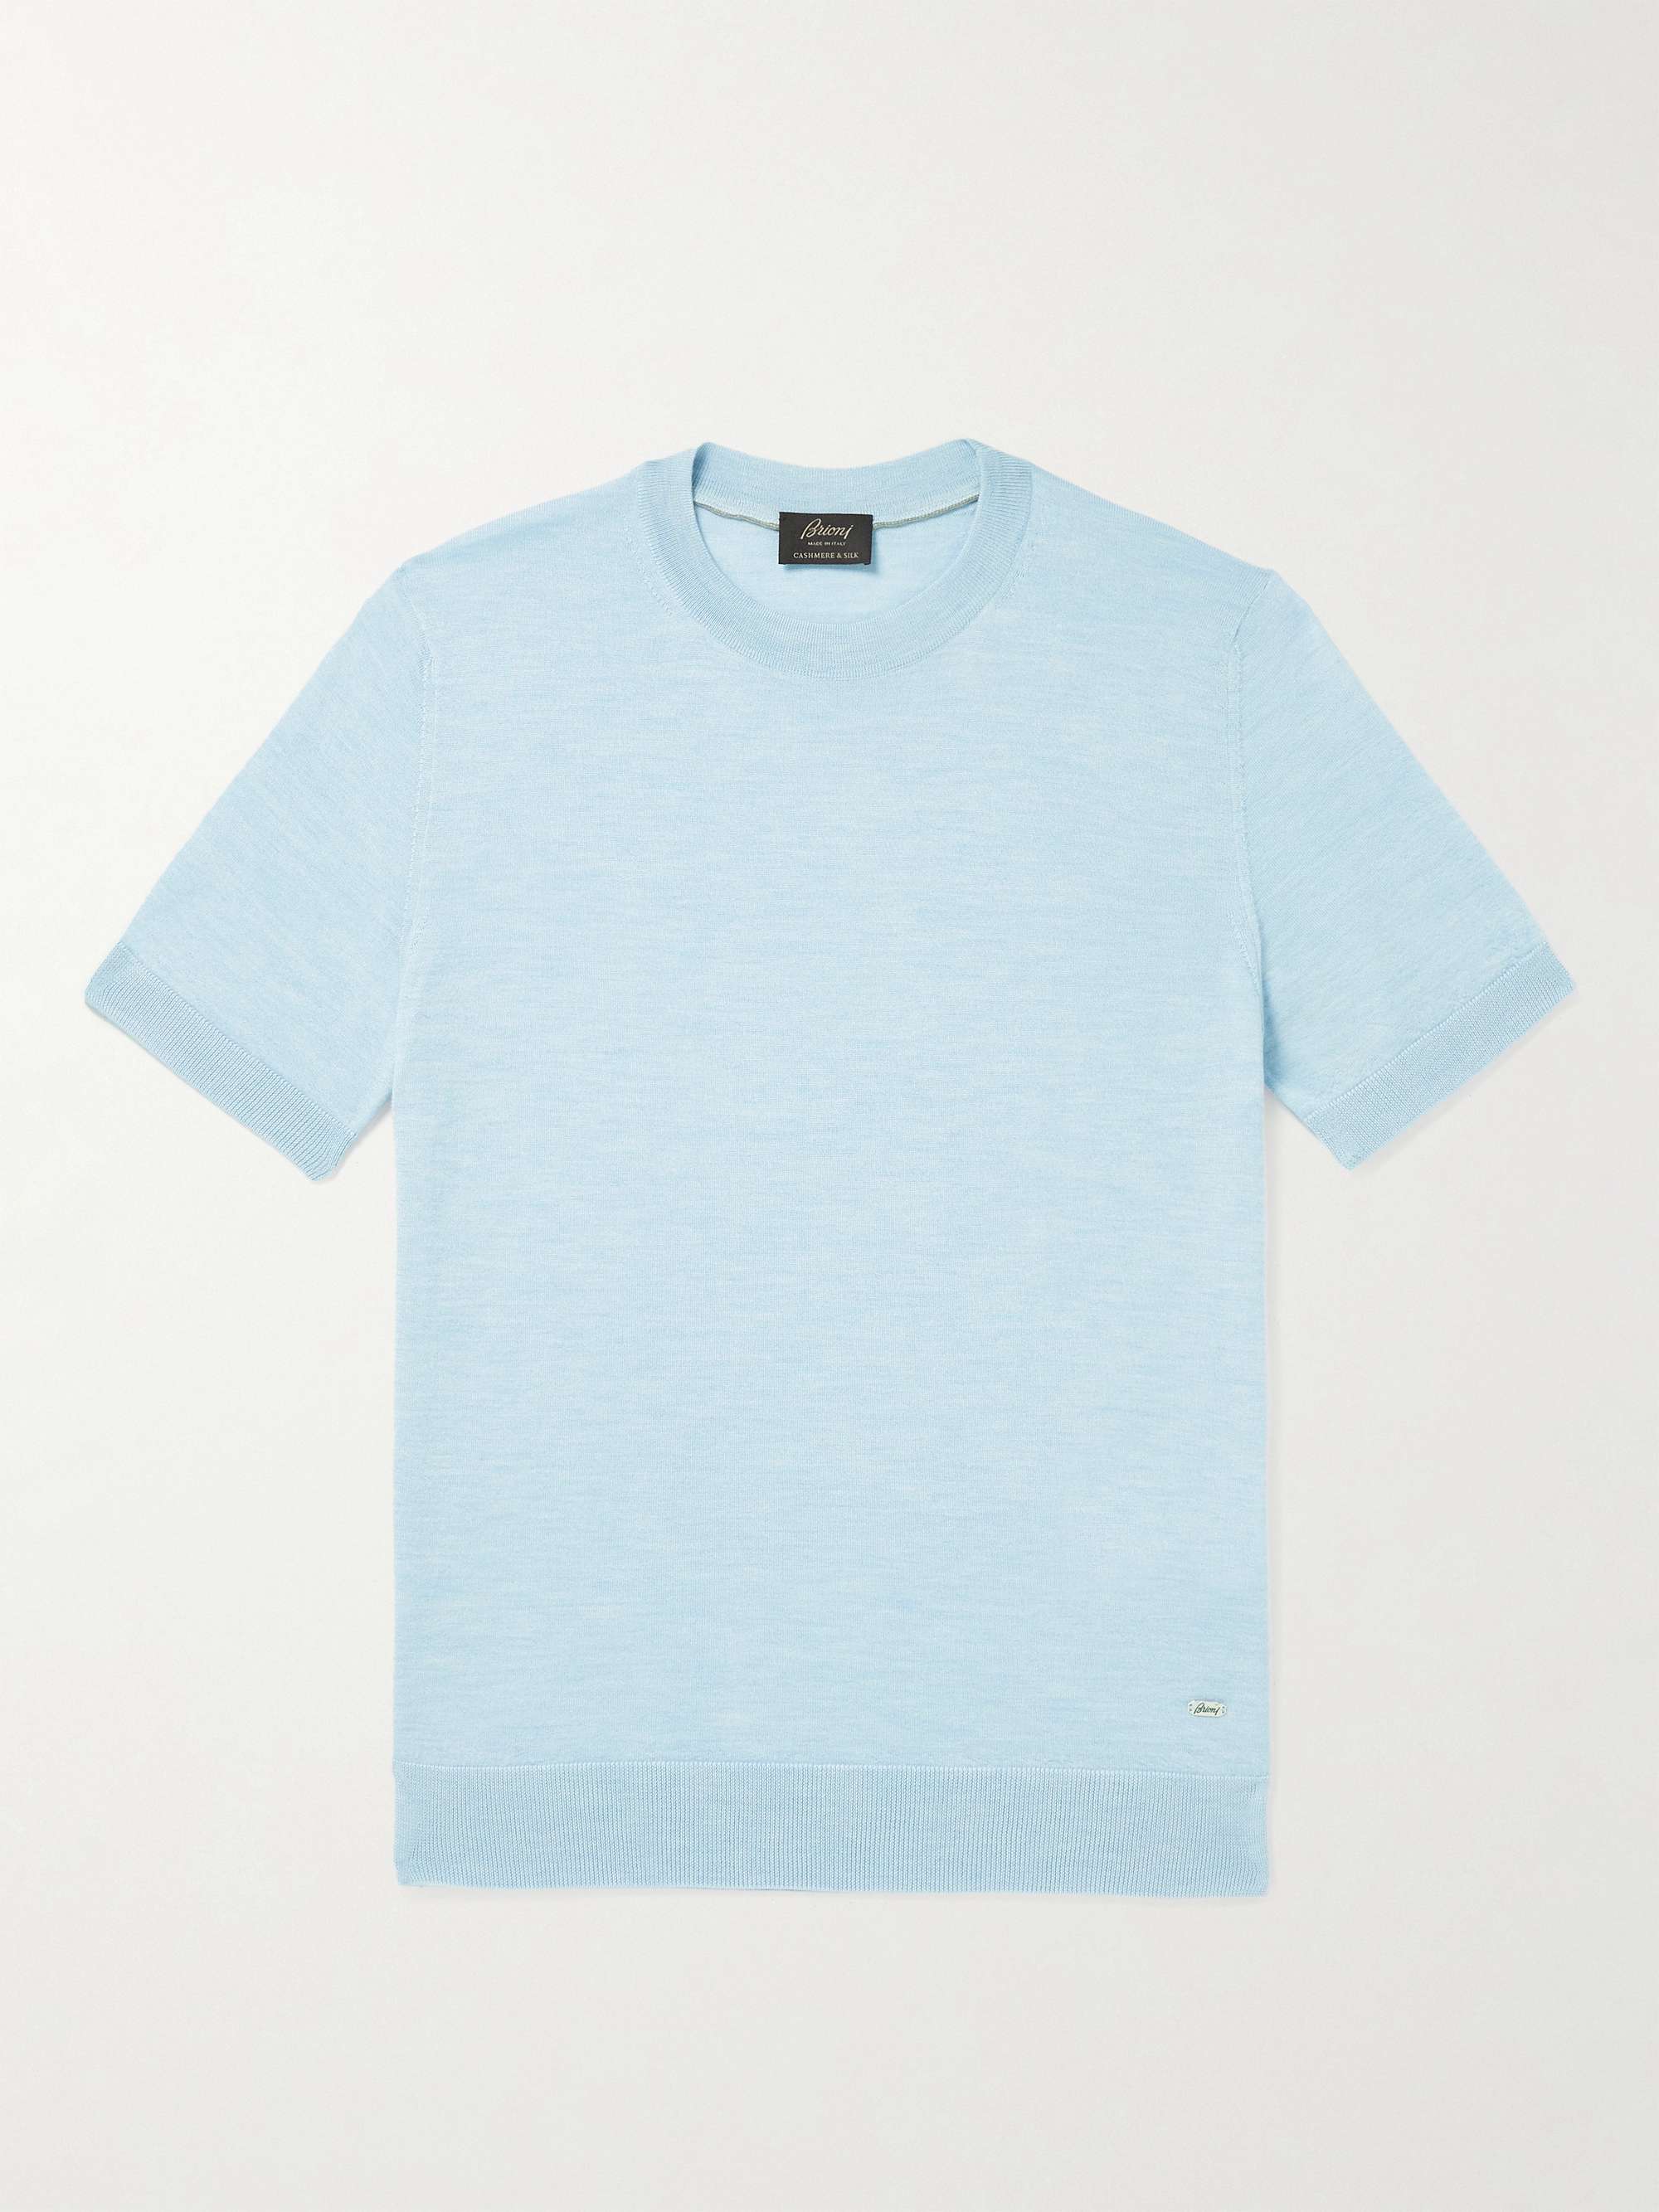 BRIONI Cashmere and Silk-Blend T-Shirt